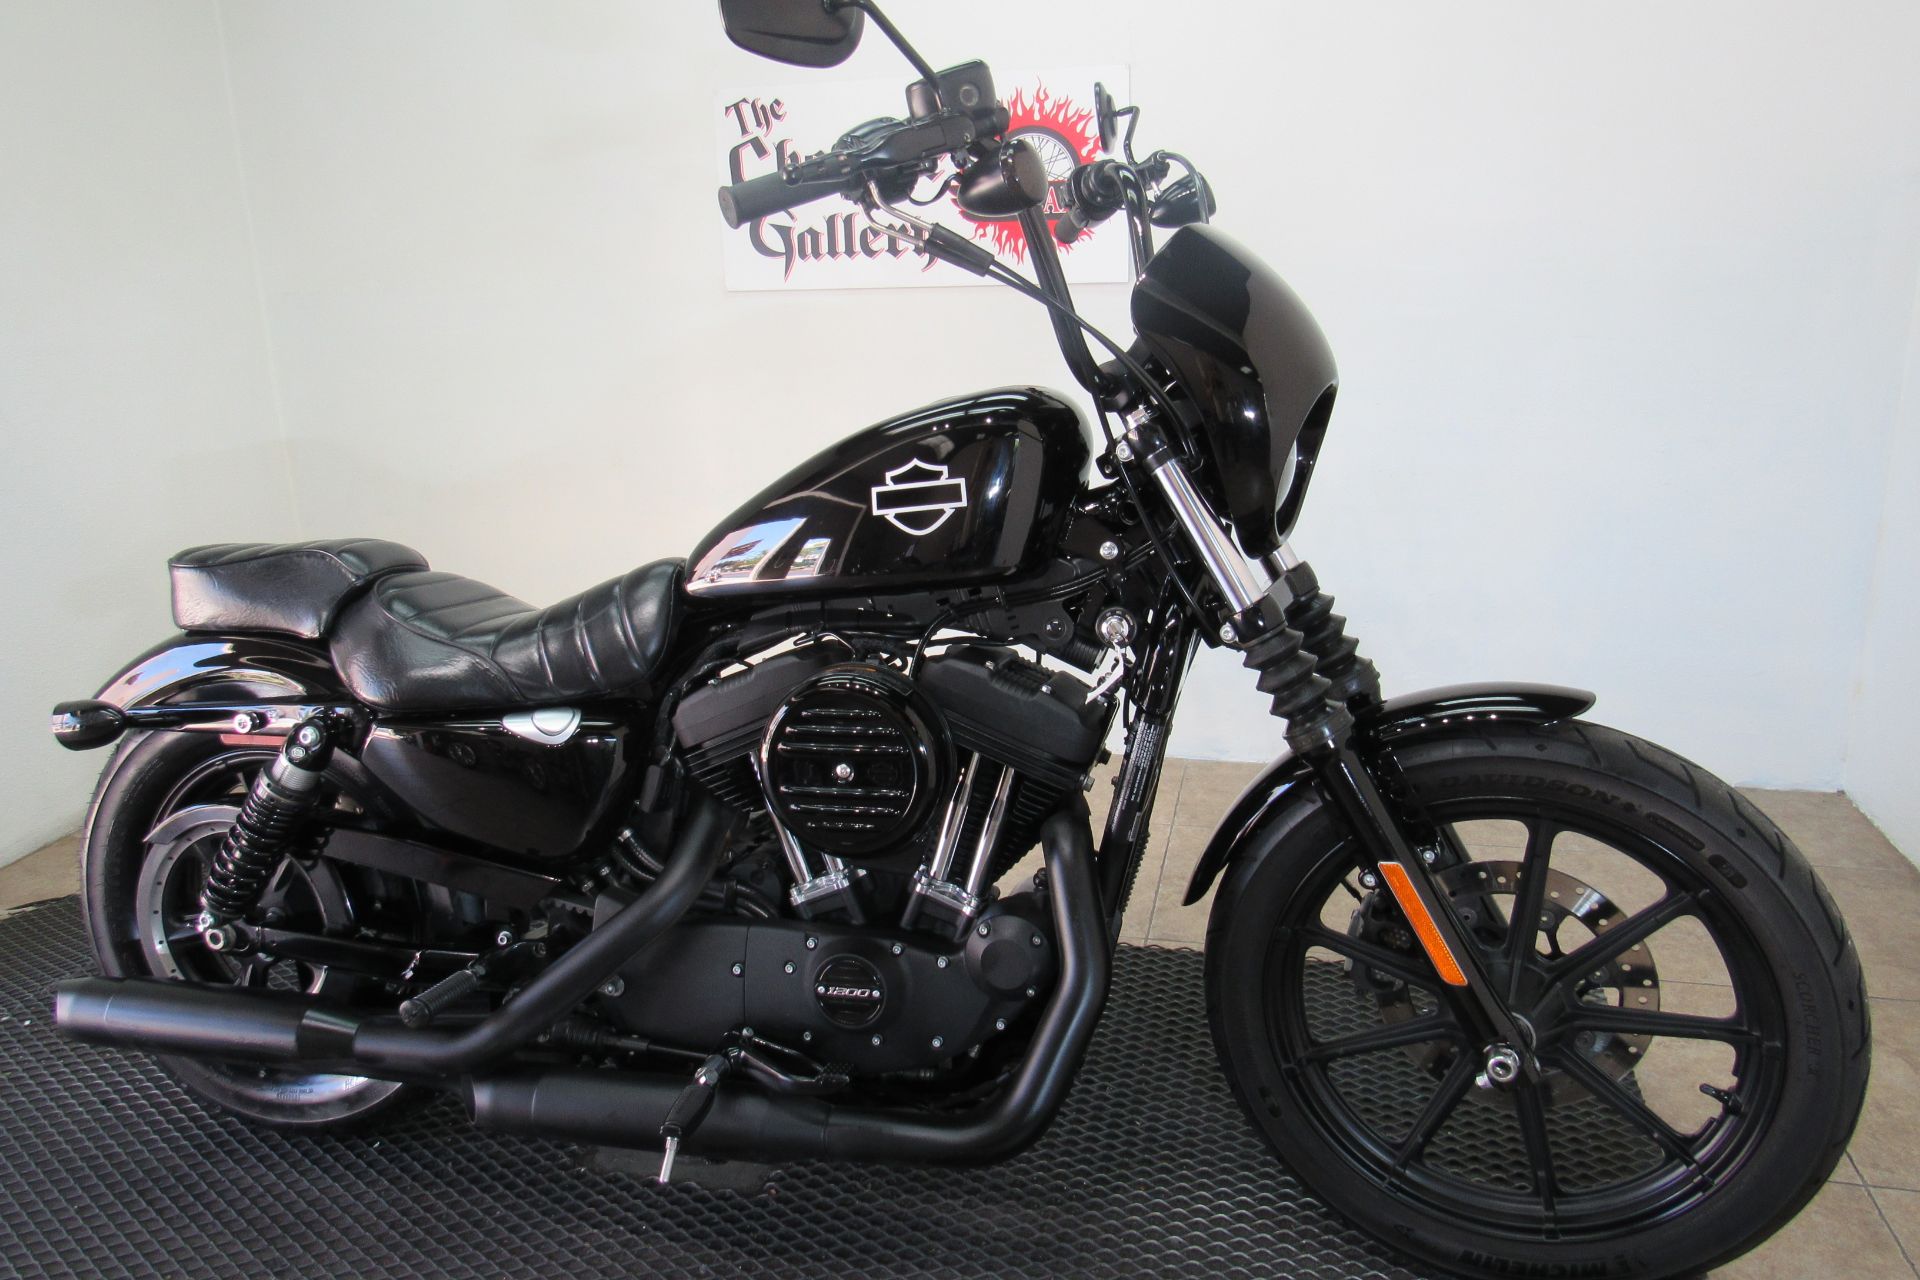 2019 Harley-Davidson Iron 1200™ in Temecula, California - Photo 2